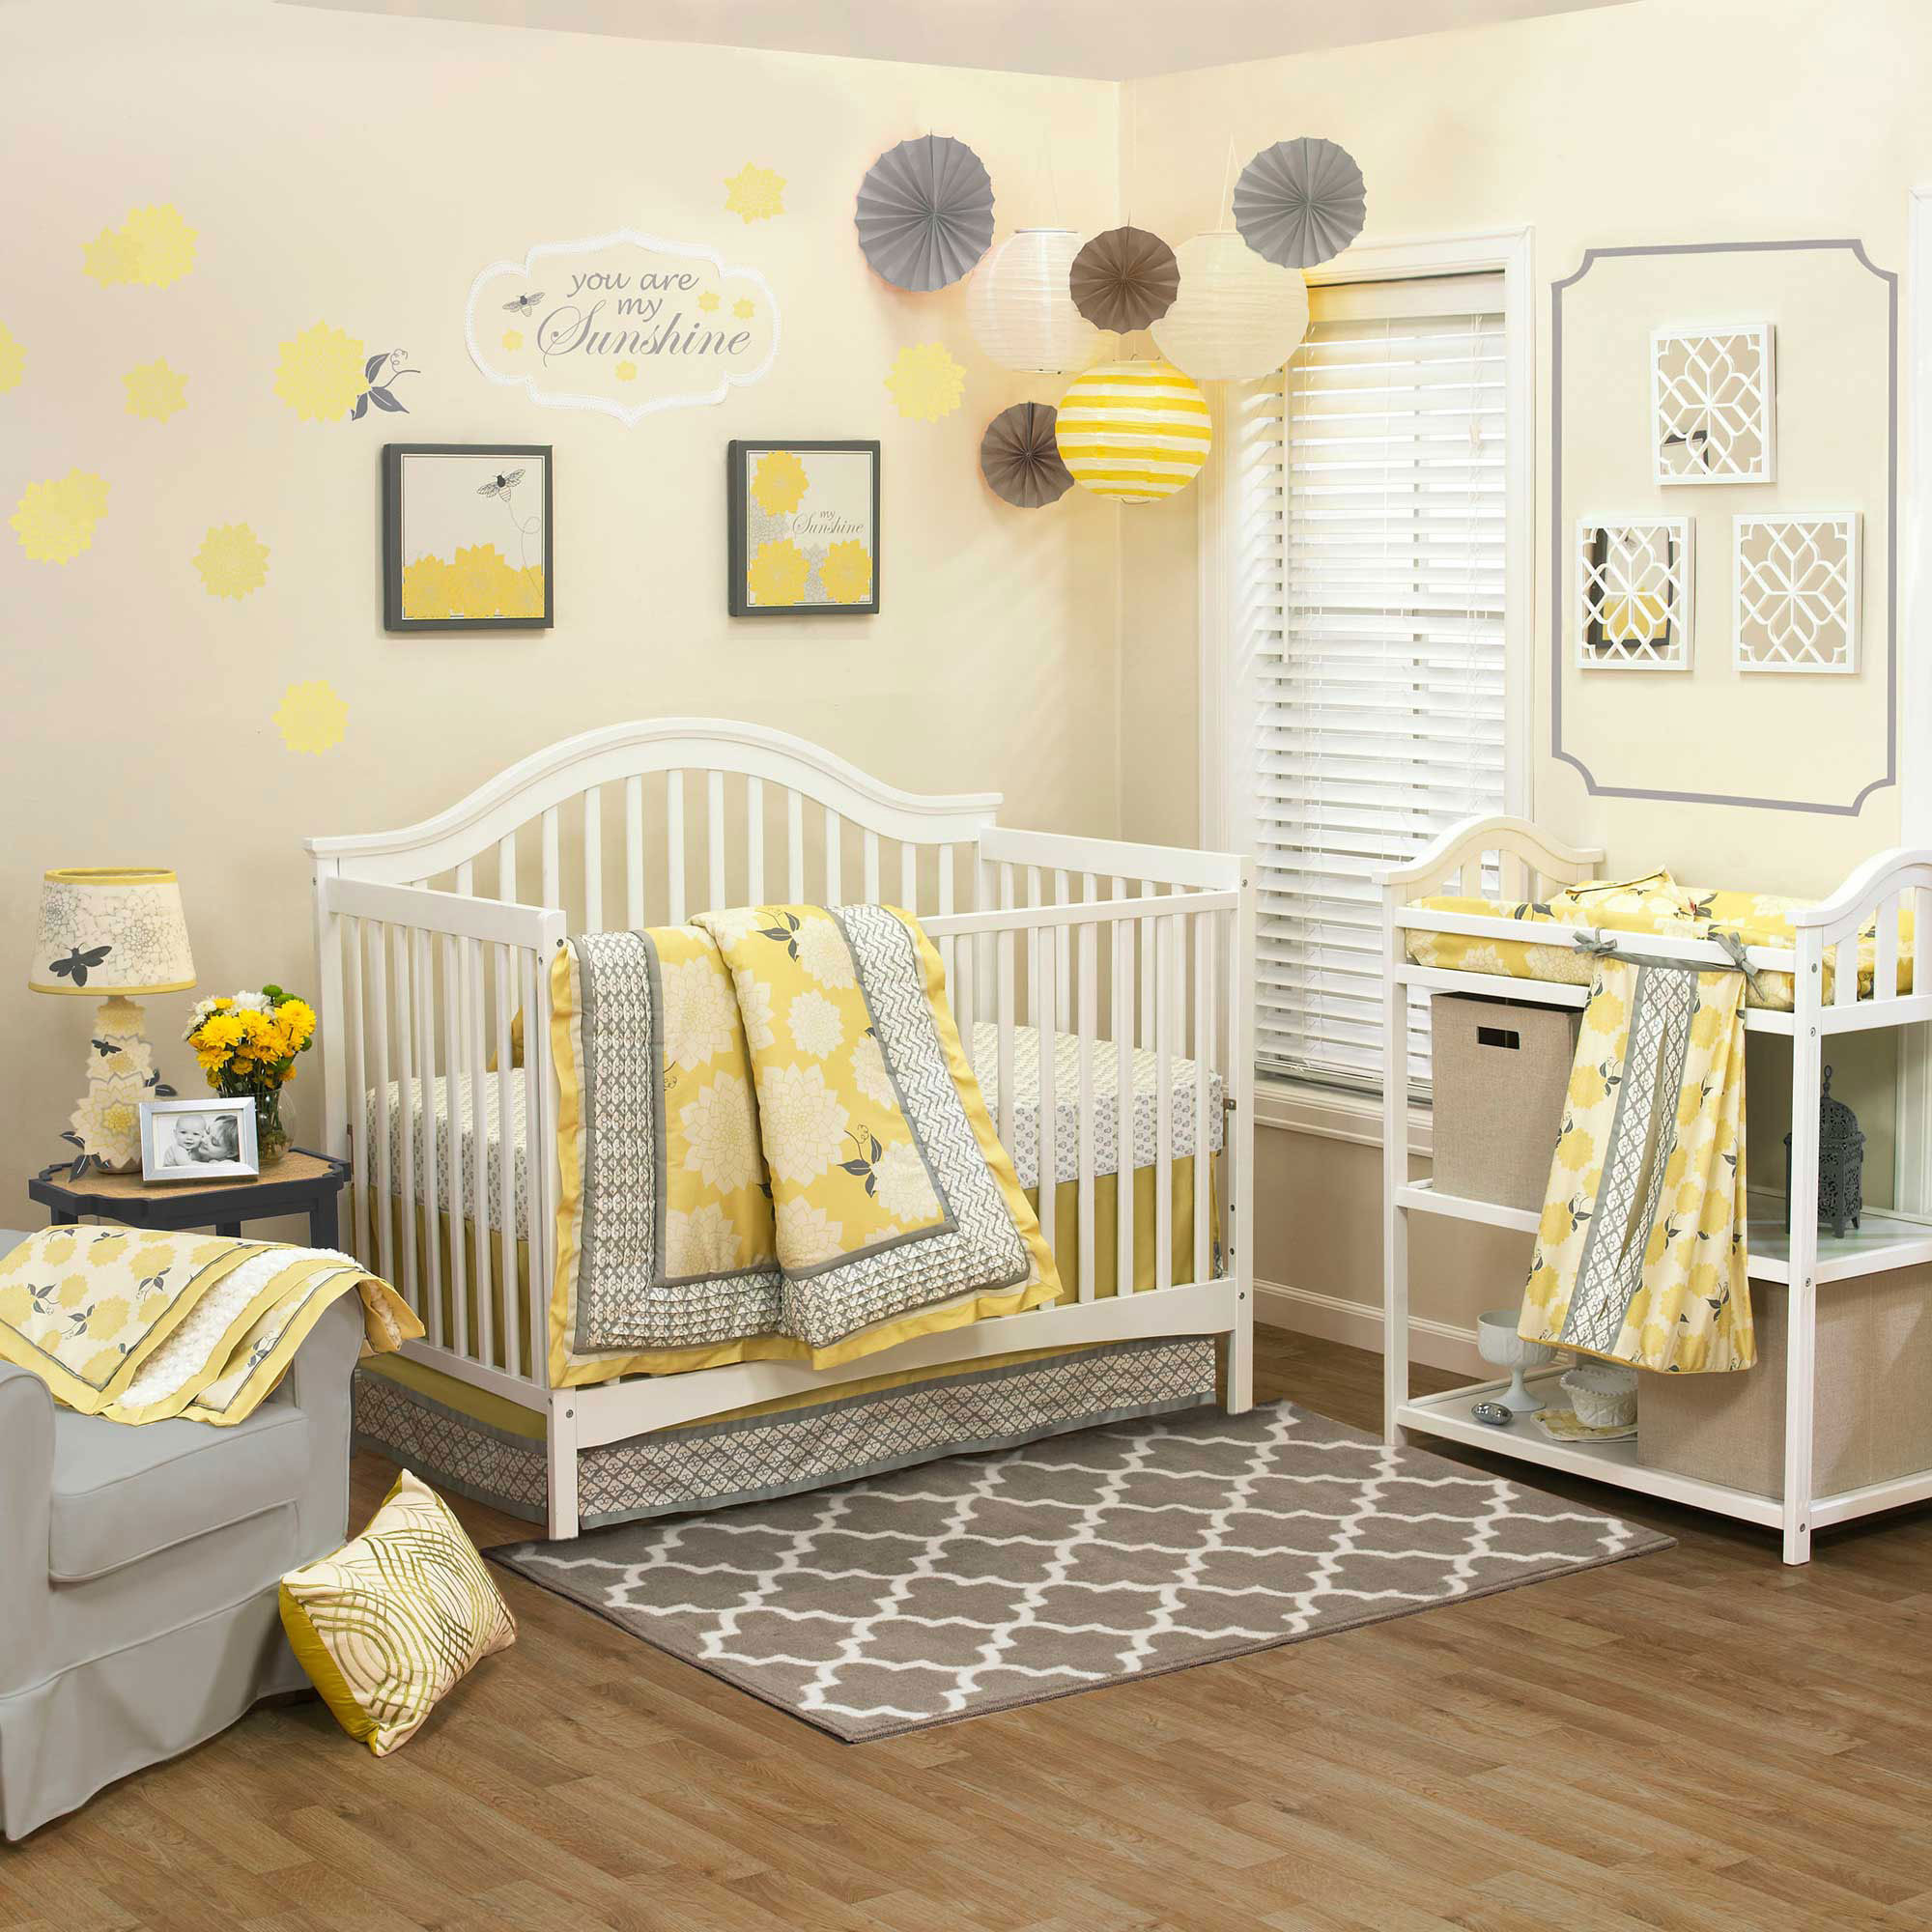 Baby Girl Nursery Decor Ideas
 Baby Girl Nursery Ideas 10 Pretty Examples Decorating Room